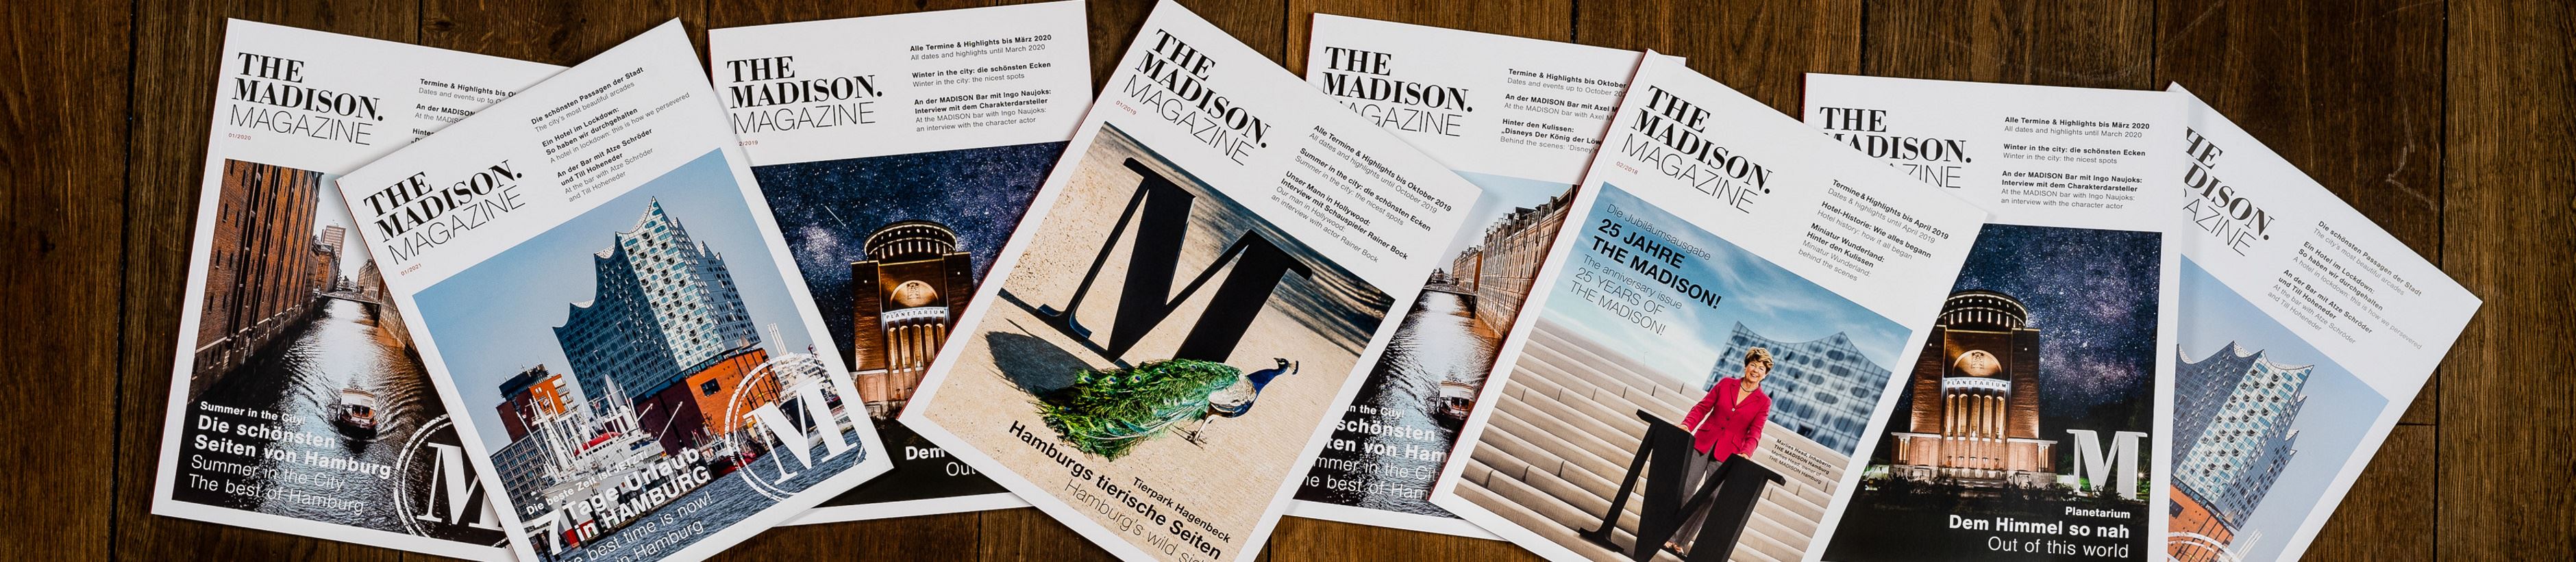 the-madison-magazin-header